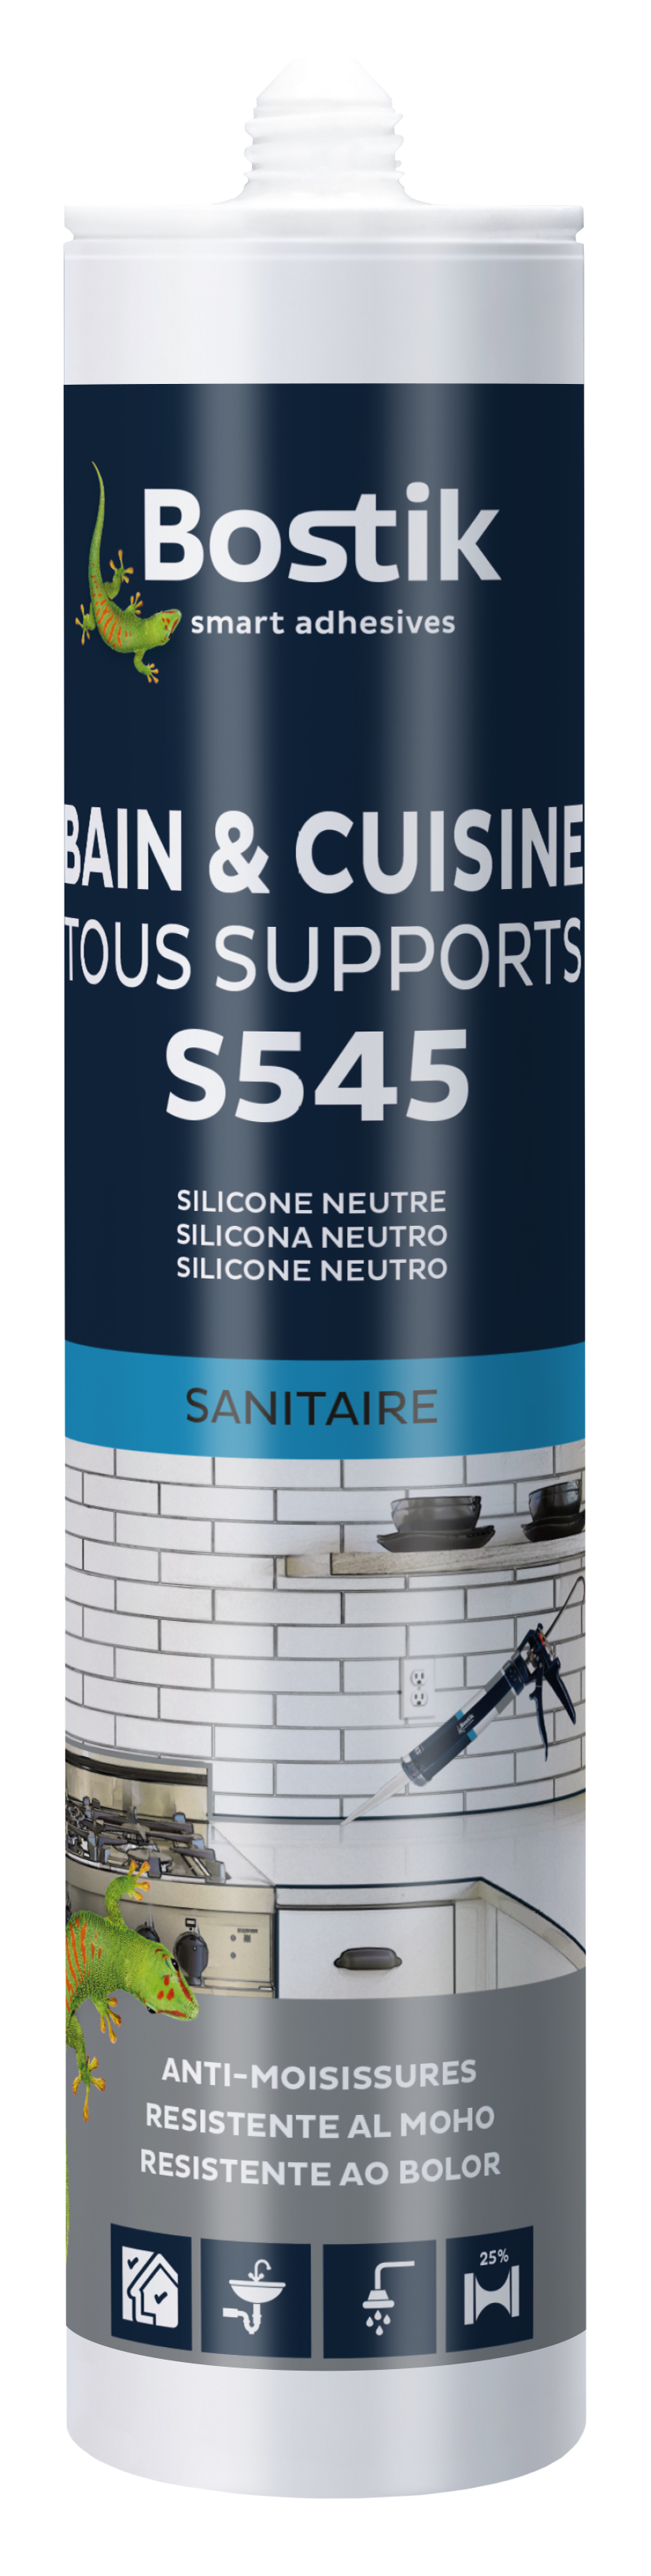 SIKA SIKASEAL® 108 SANITAIRE Mastic silicone anti-moisissure spécial salle  de bain - 300ml - transparent